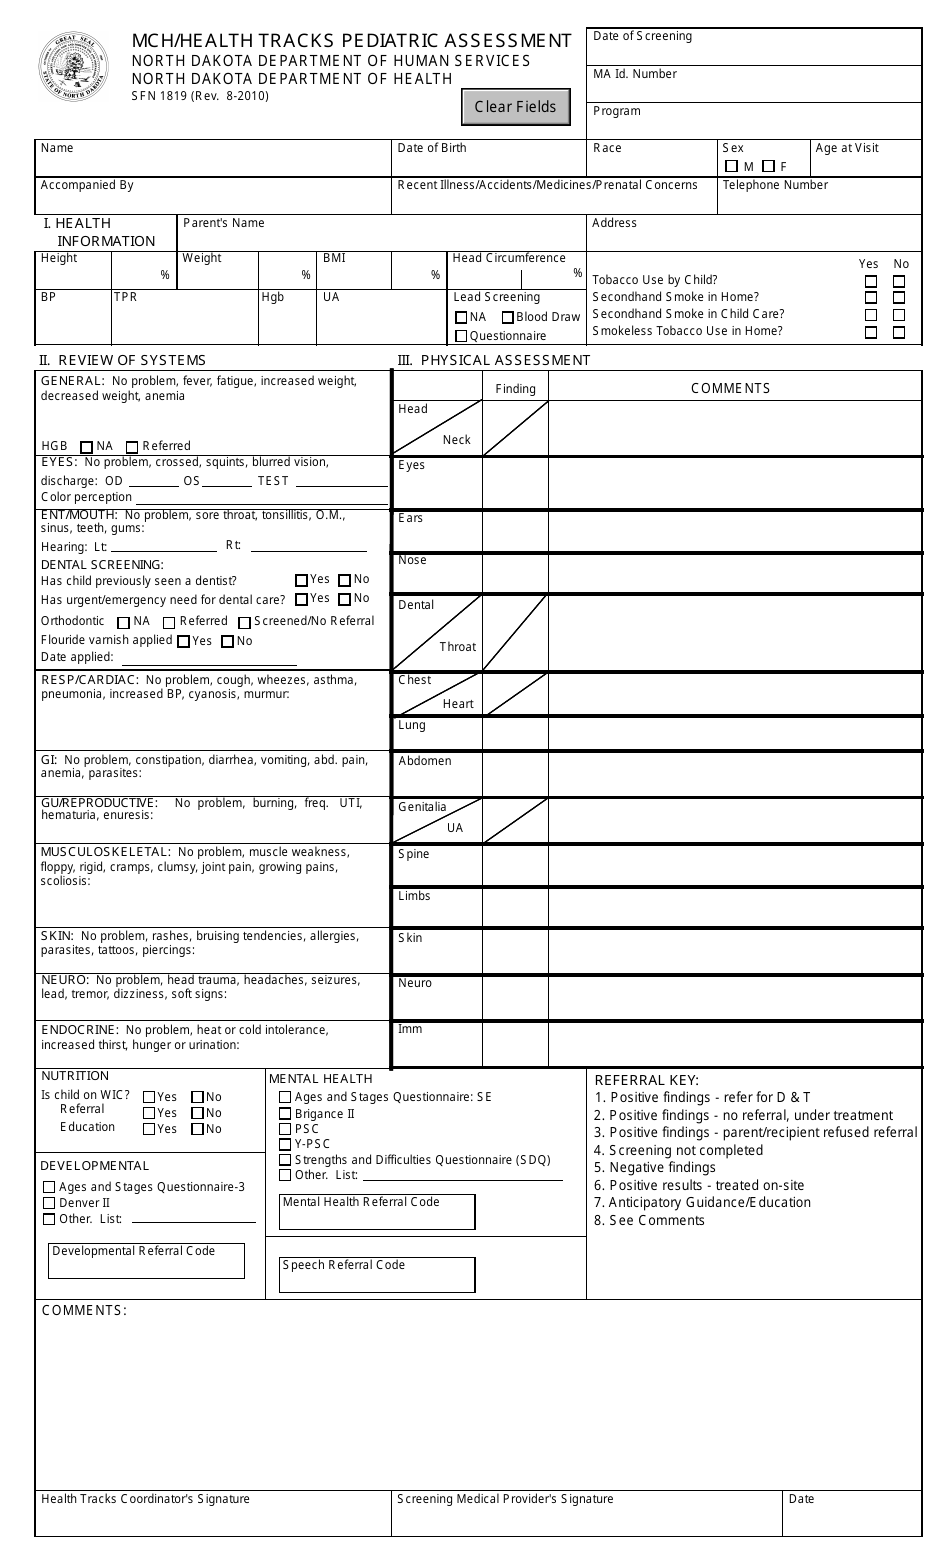 Form SFN1819 Mch / Health Tracks Pediatric Assessment - North Dakota, Page 1